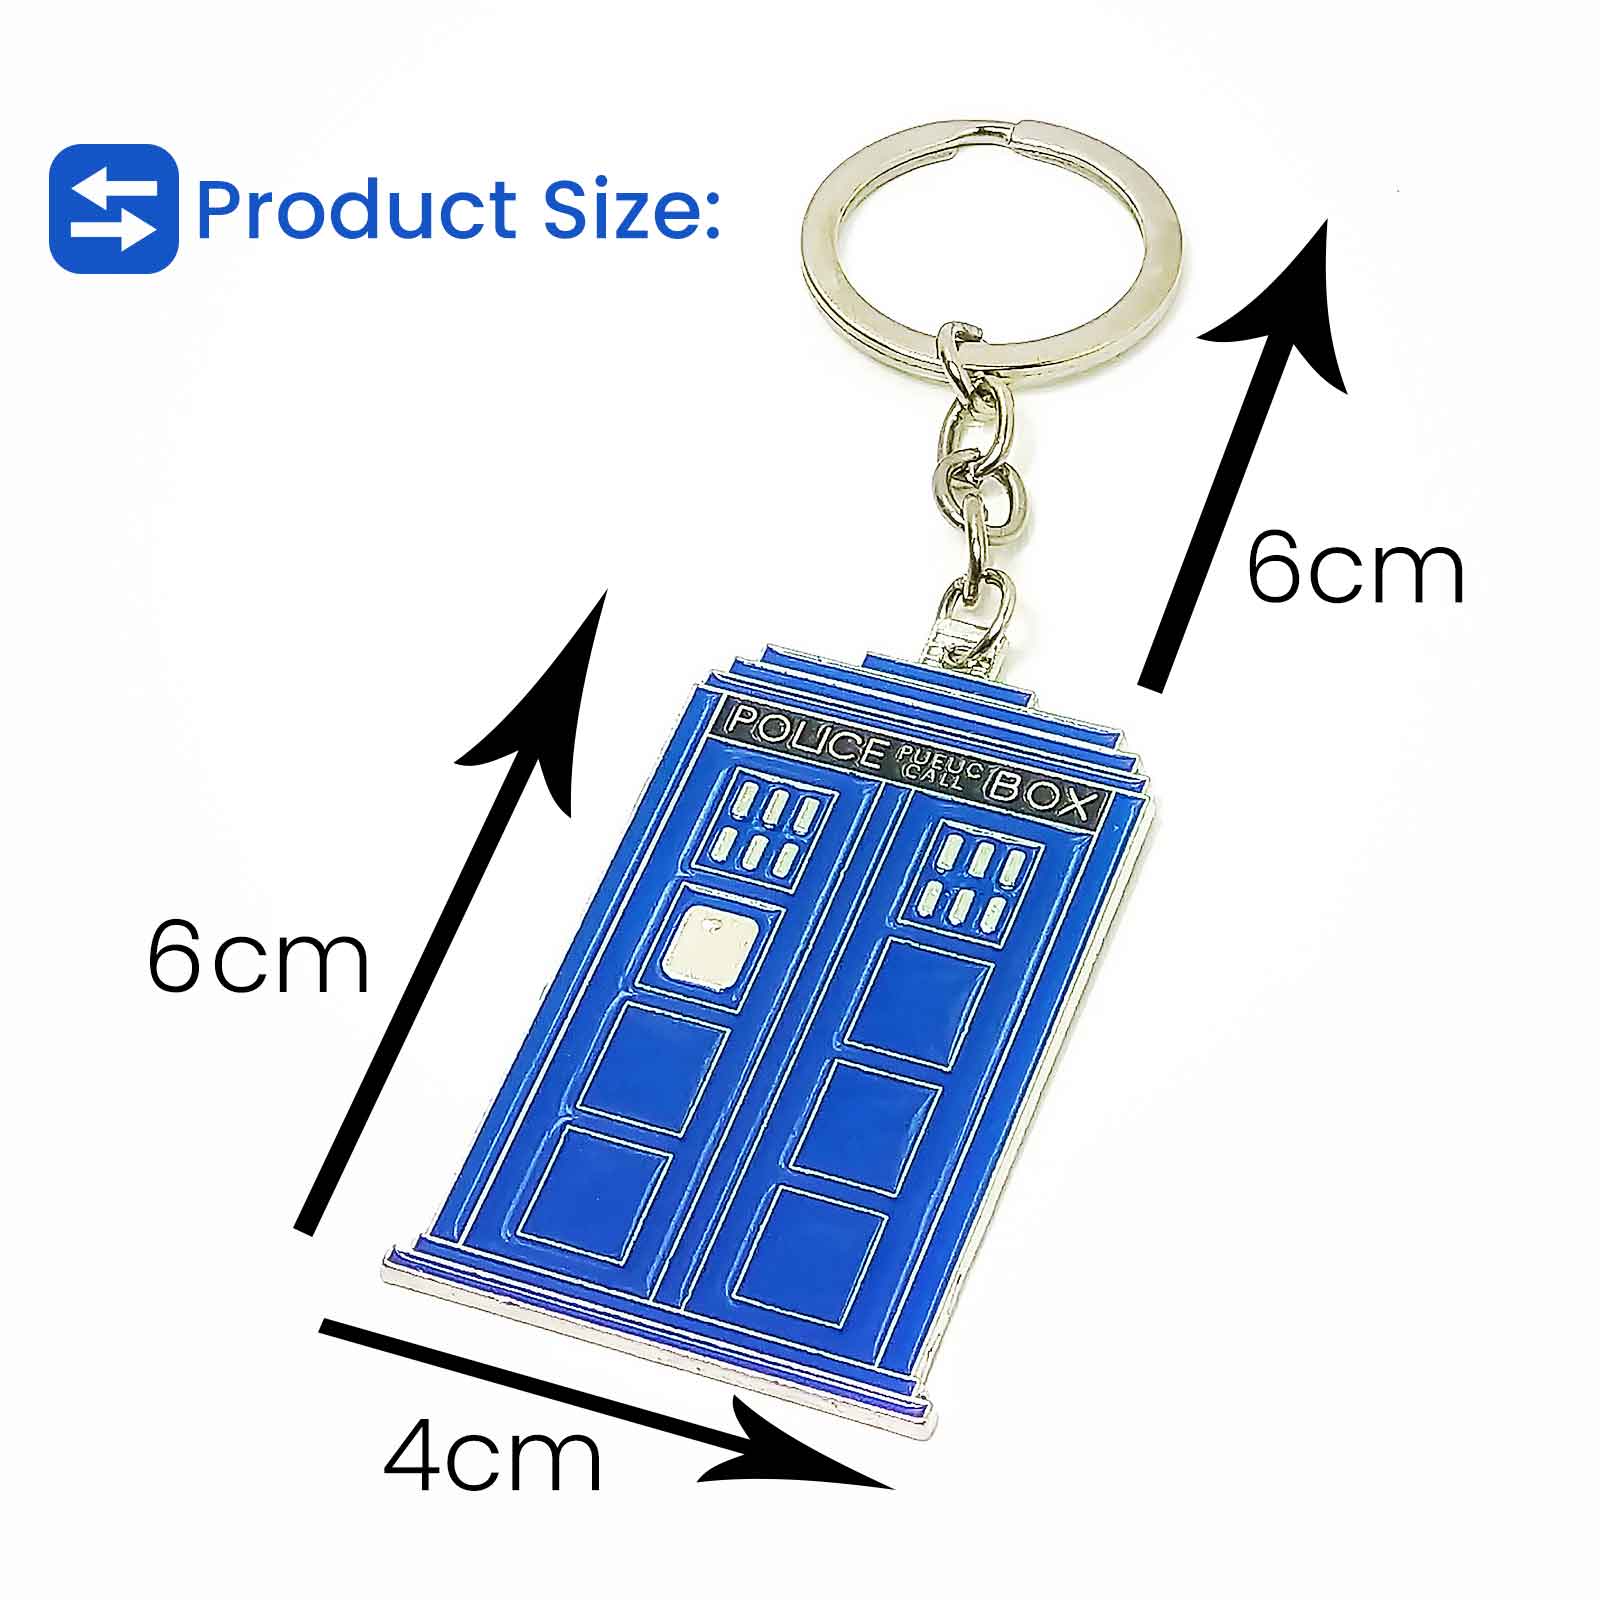 Dr Who Police Box Tardis Blue Keyring - Bag Charms & Keyrings by Fashion Accessories